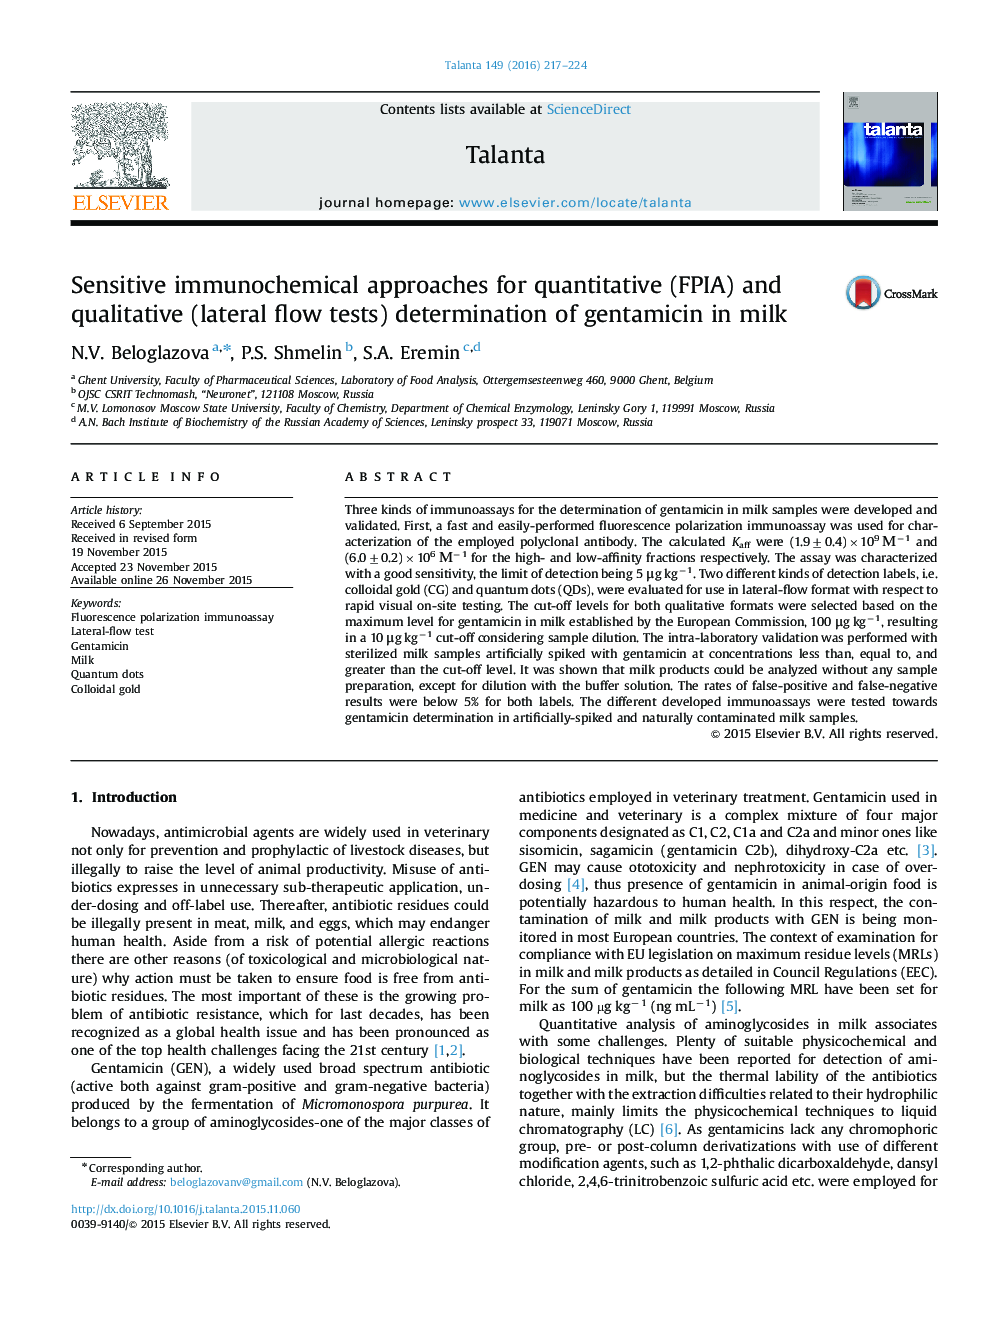 Sensitive immunochemical approaches for quantitative (FPIA) and qualitative (lateral flow tests) determination of gentamicin in milk